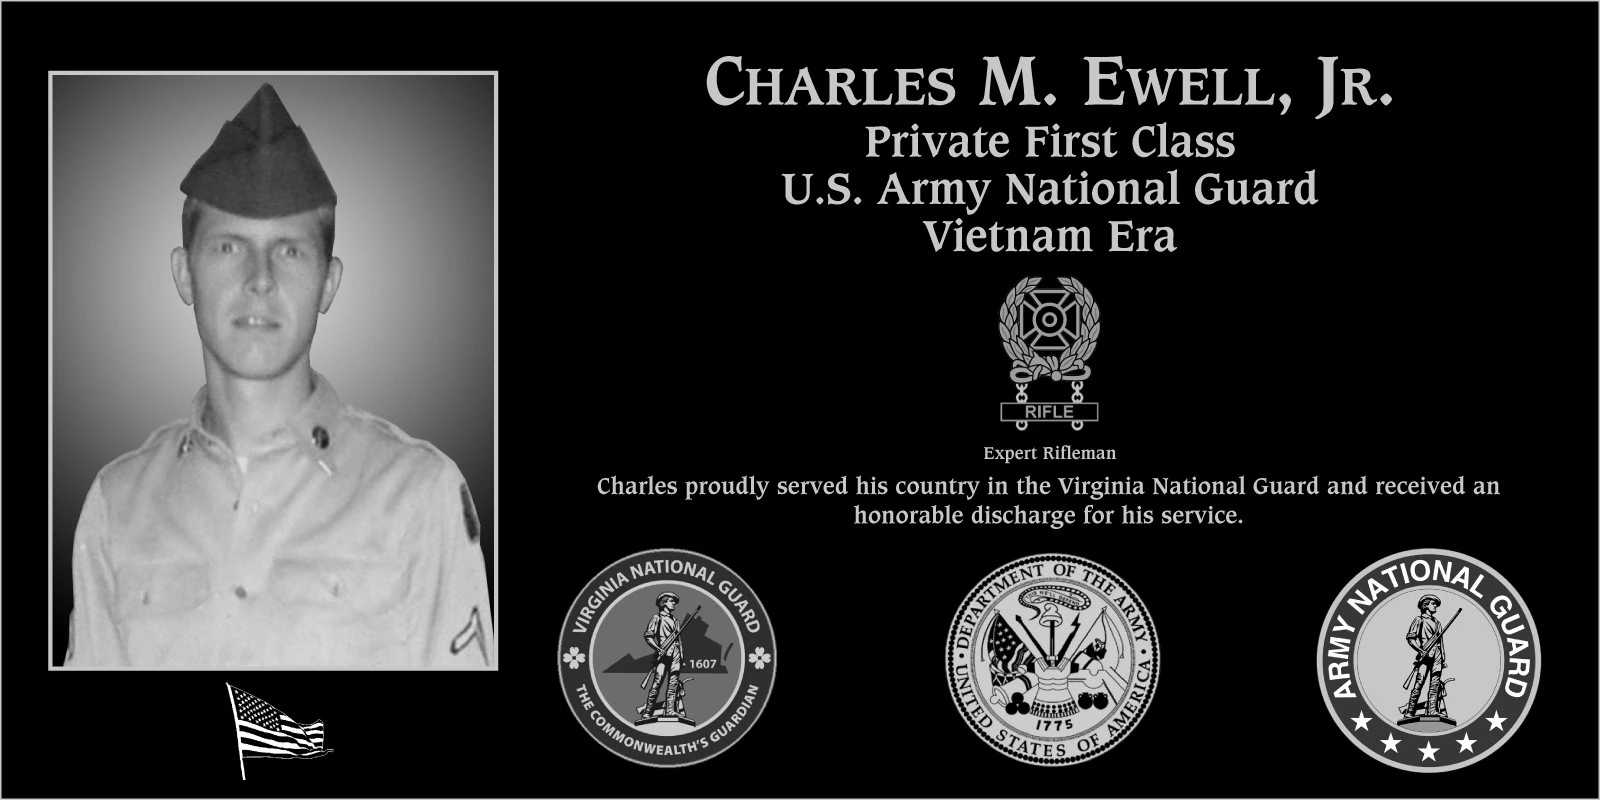 Charles M. Ewell jr